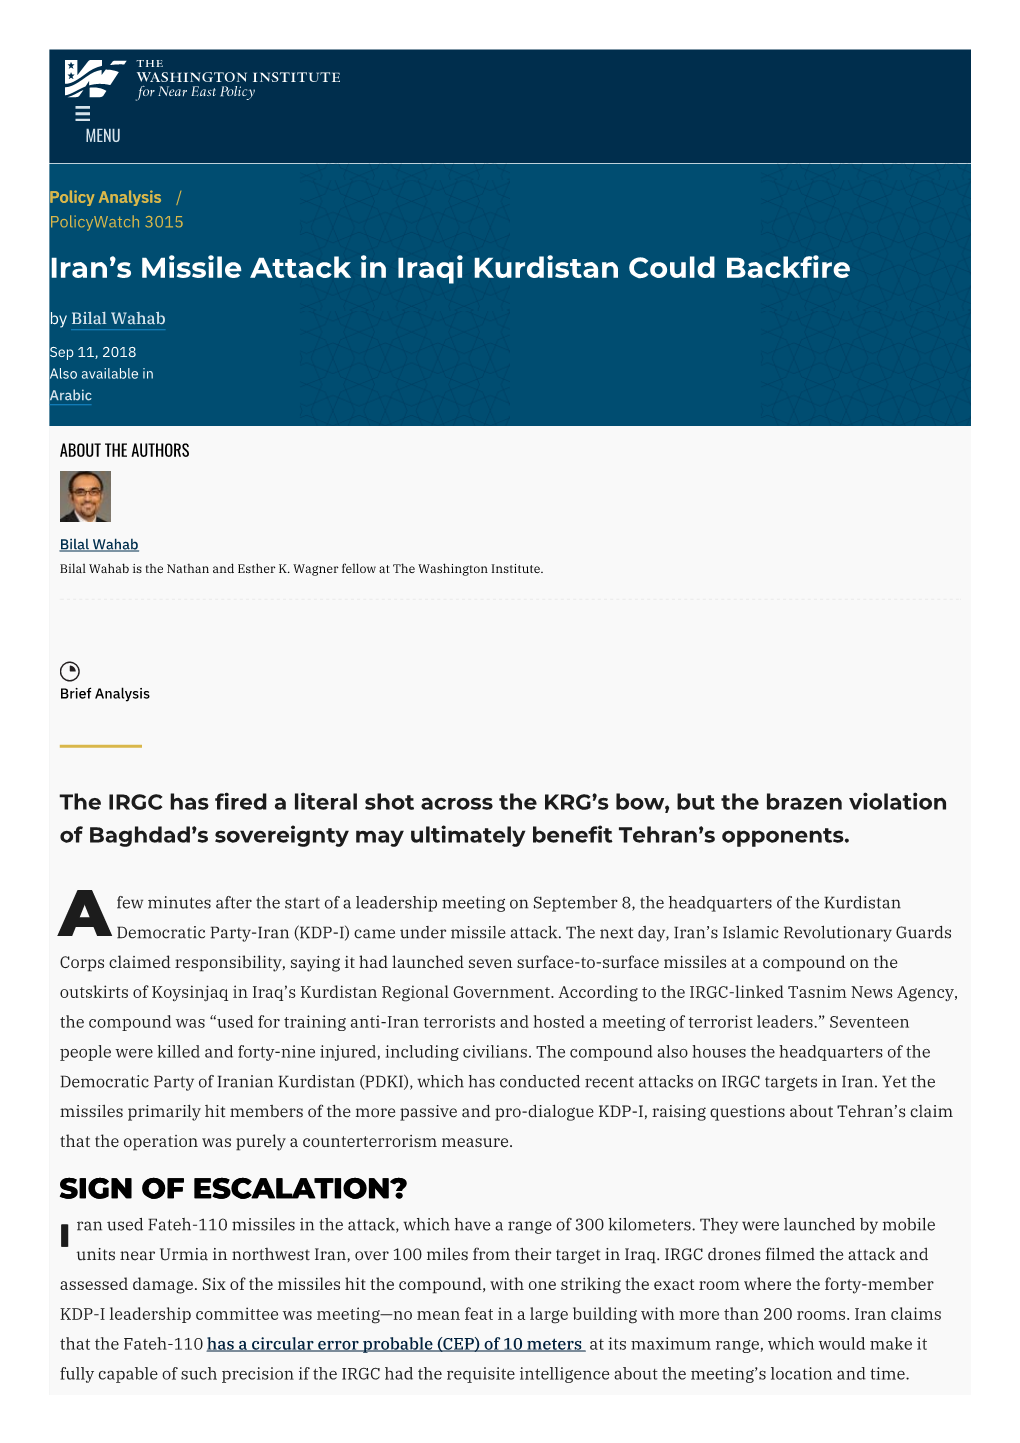 Iran's Missile Attack in Iraqi Kurdistan Could Backfire | the Washington Institute